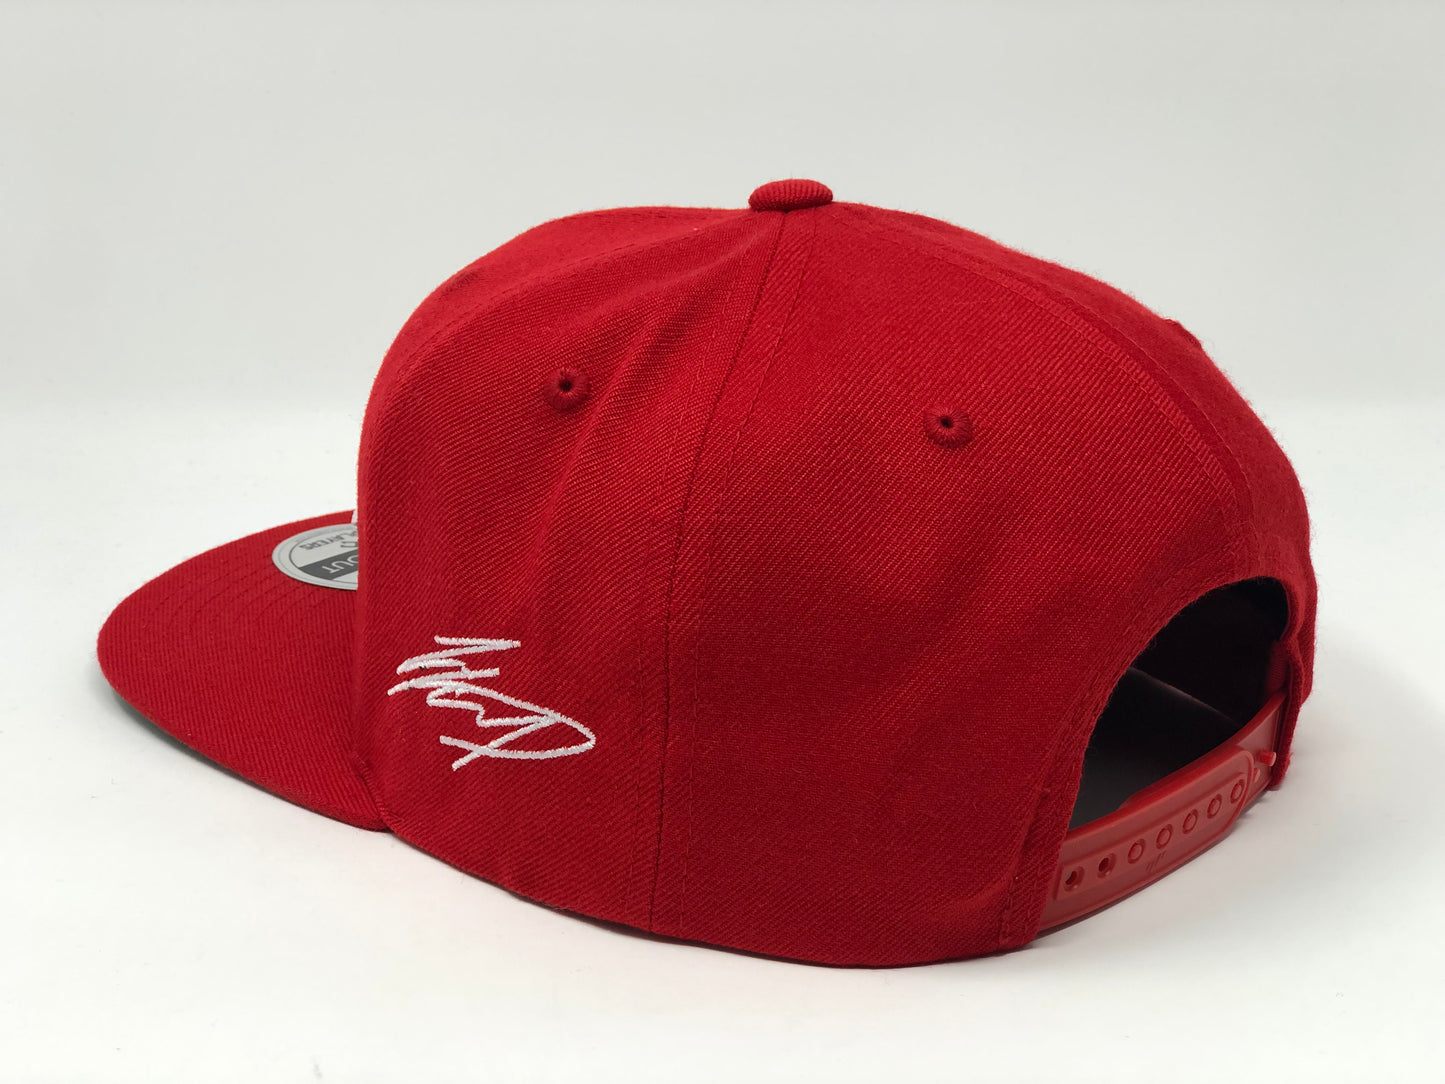 Shohei Ohtani Kanji Hat - Red Snapback